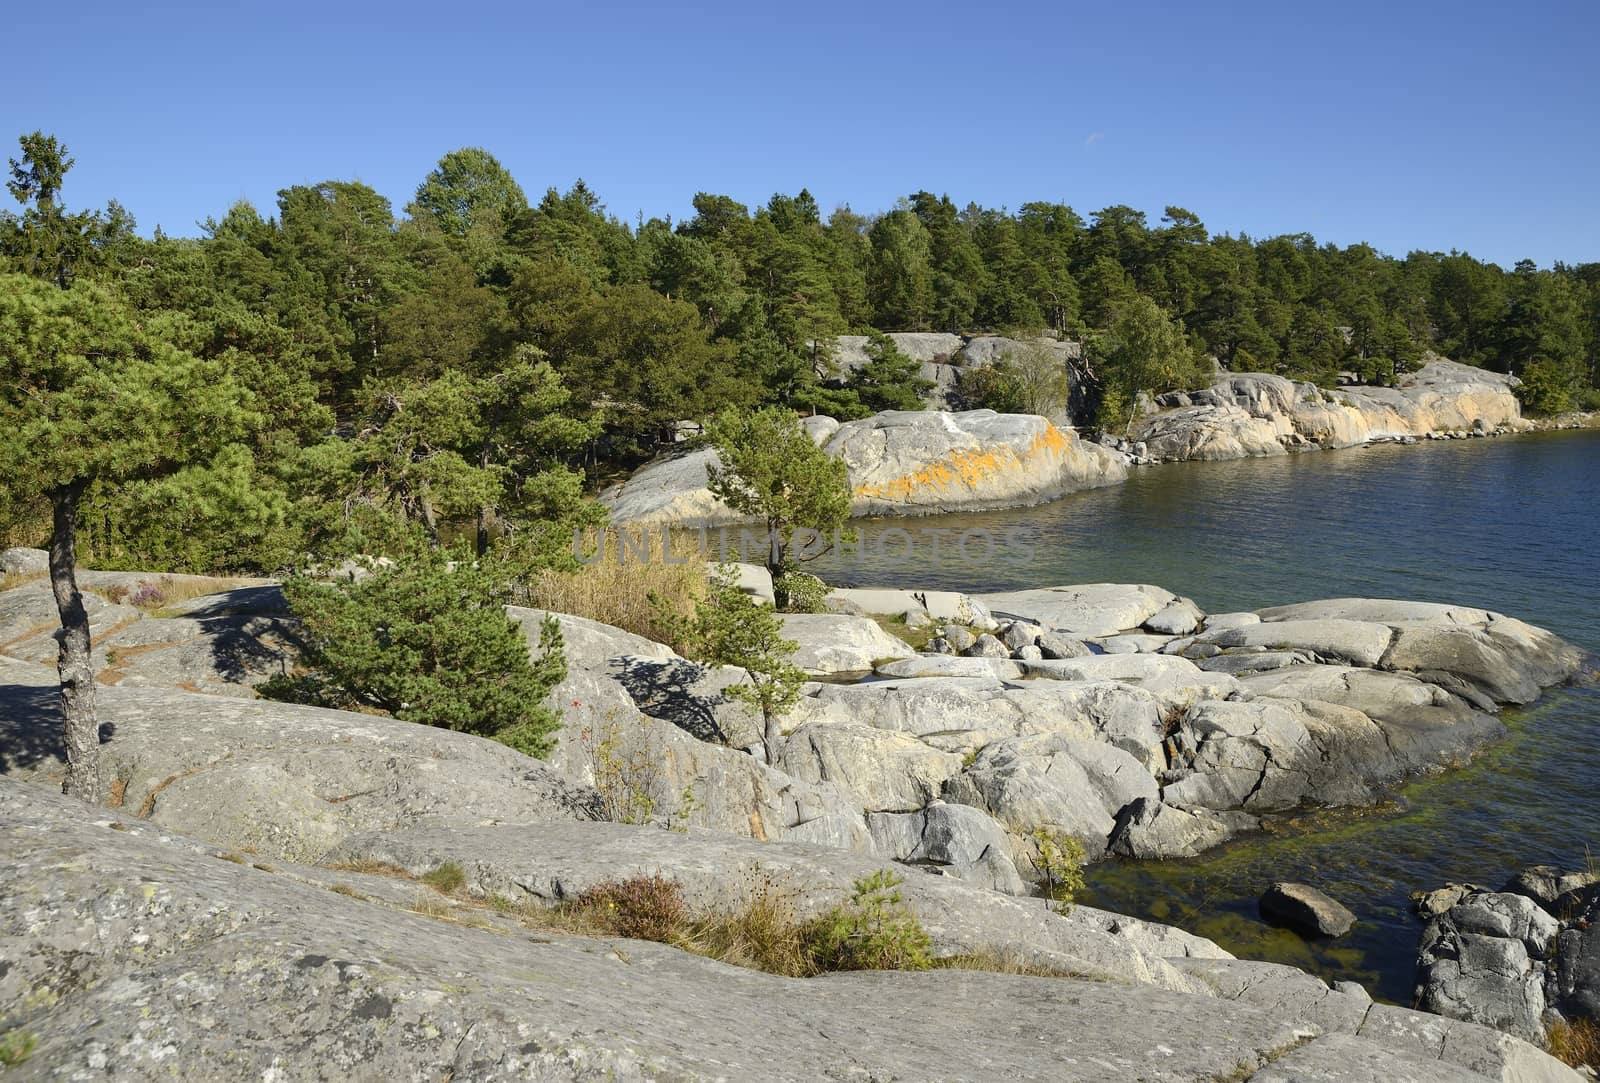 Seascape, Stockholm archipelago.